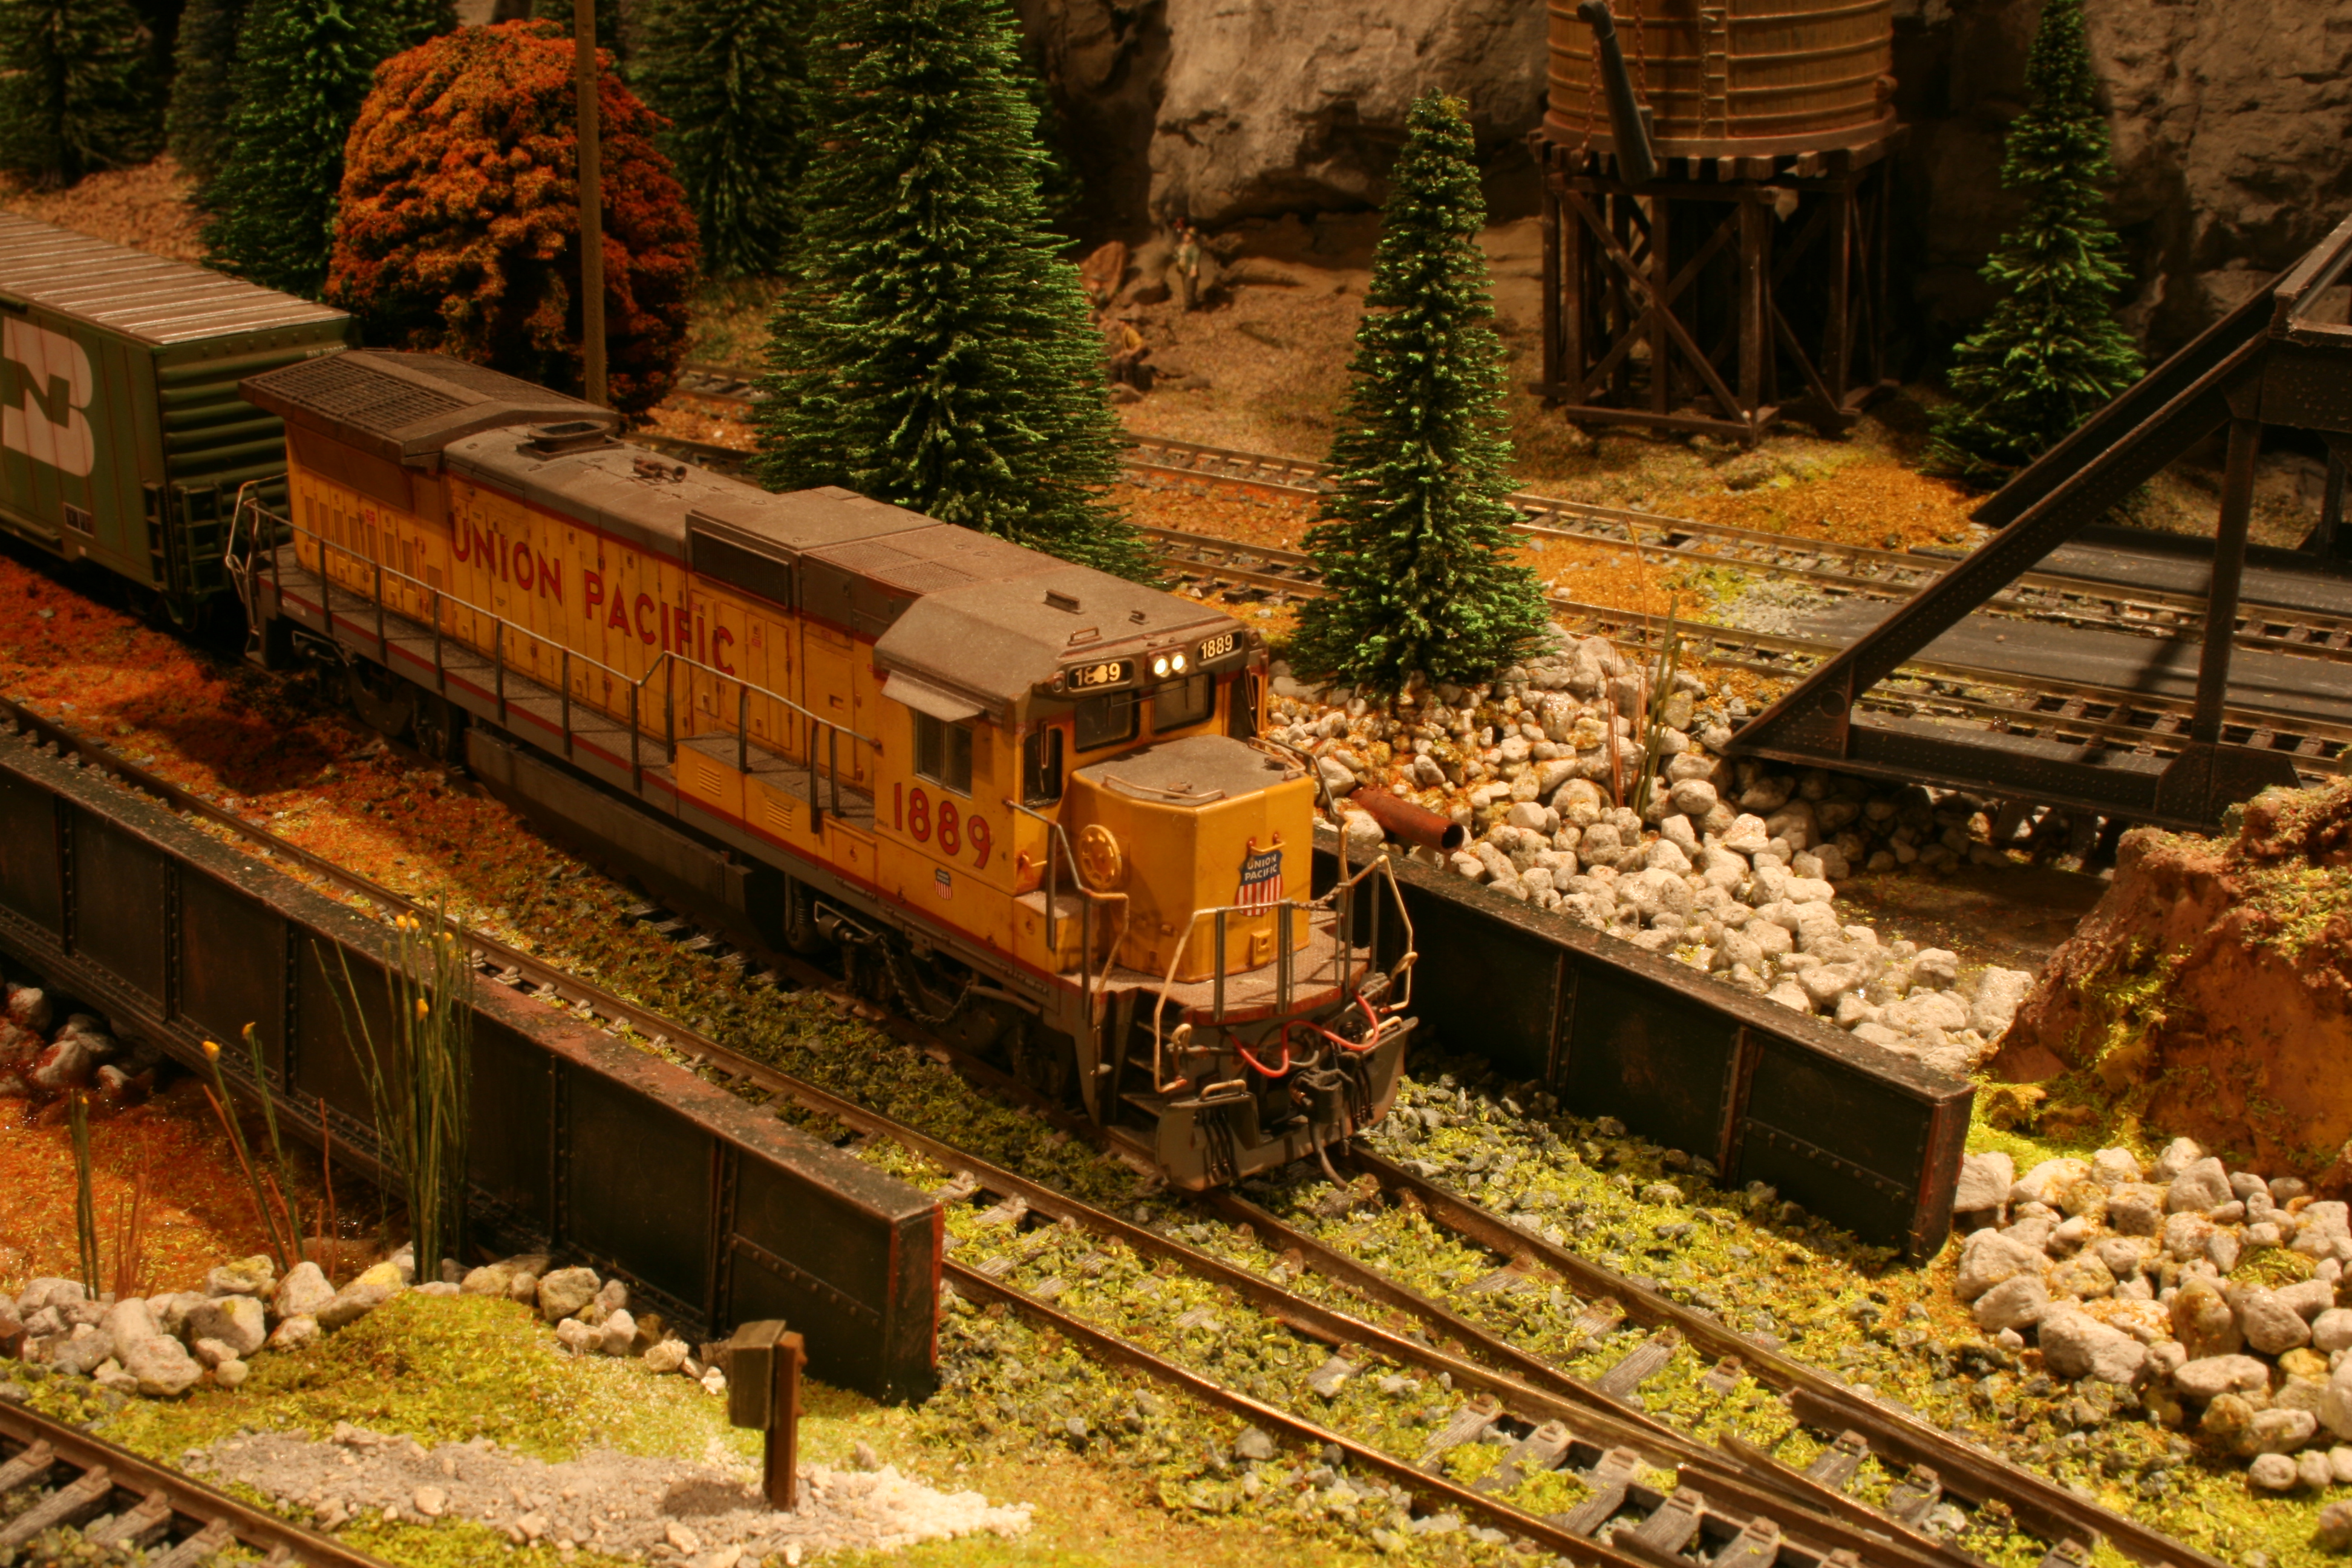 File:US model railroad 04.jpg - Wikimedia Commons